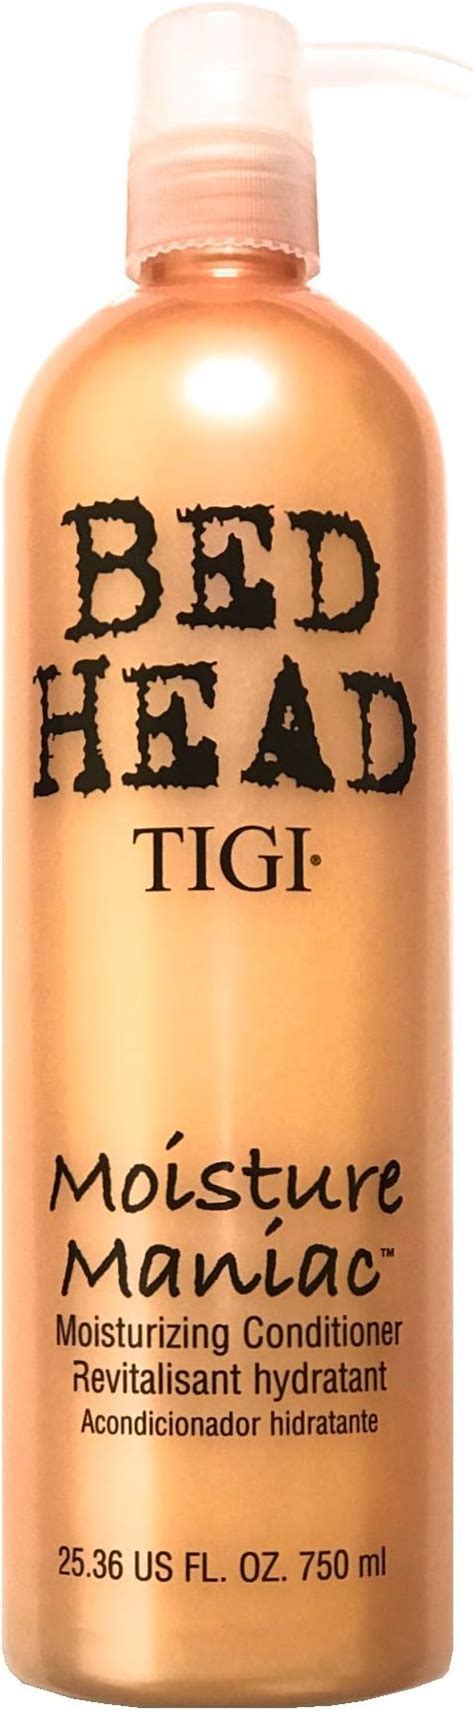 Amazon Com TIGI Bed Head Self Absorbed Mega Vitamin Conditioner 25